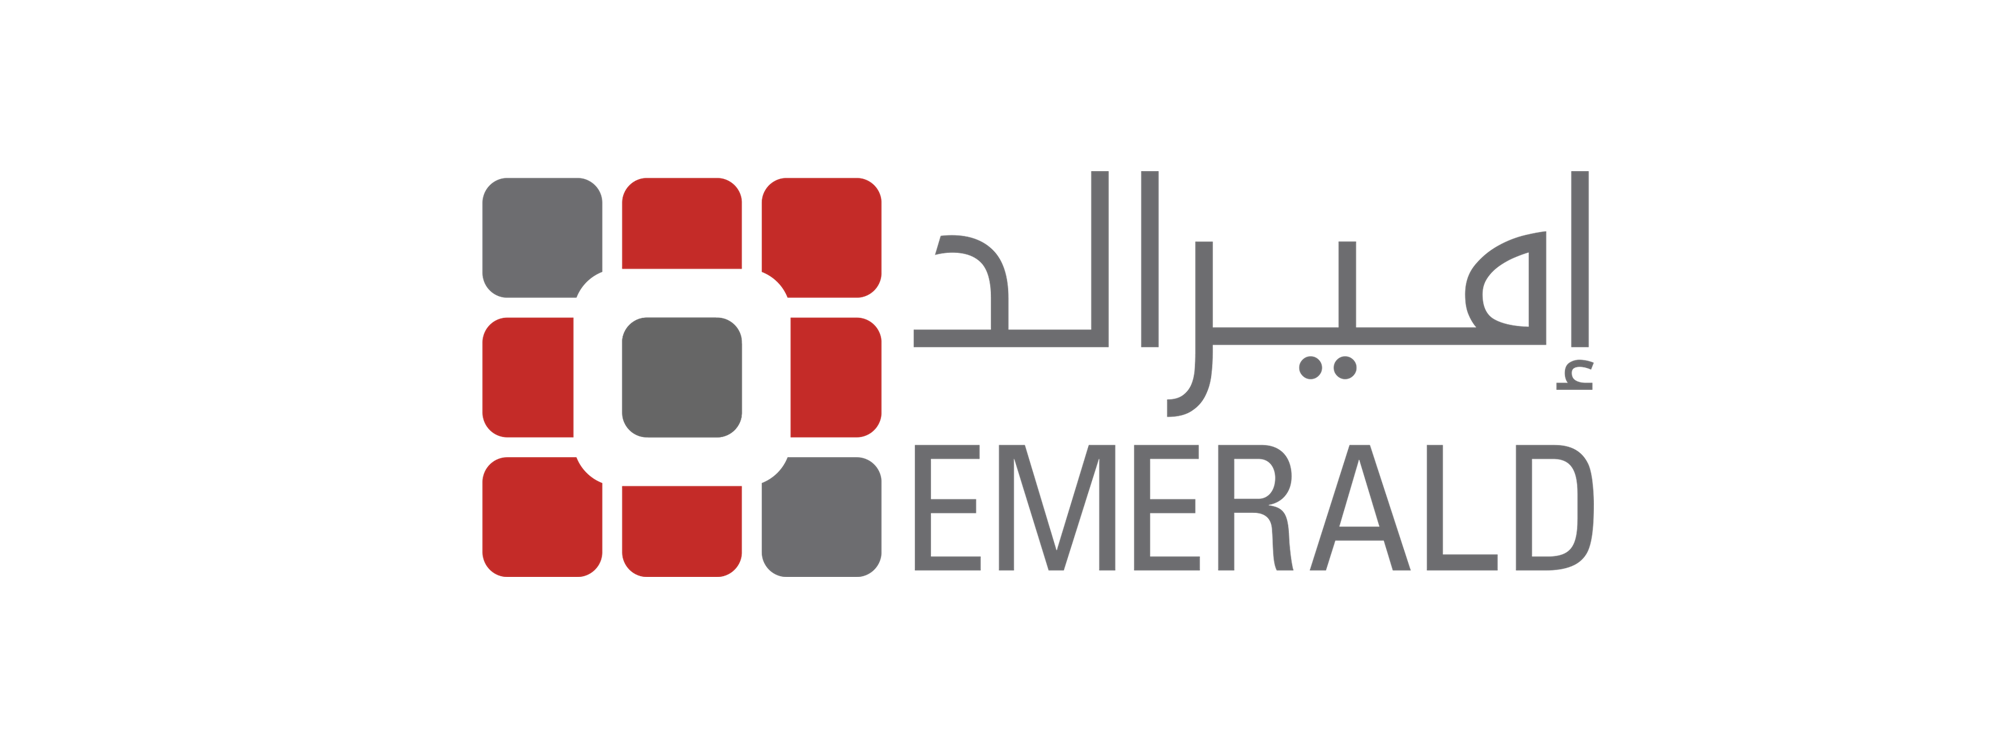 Emerald Logo